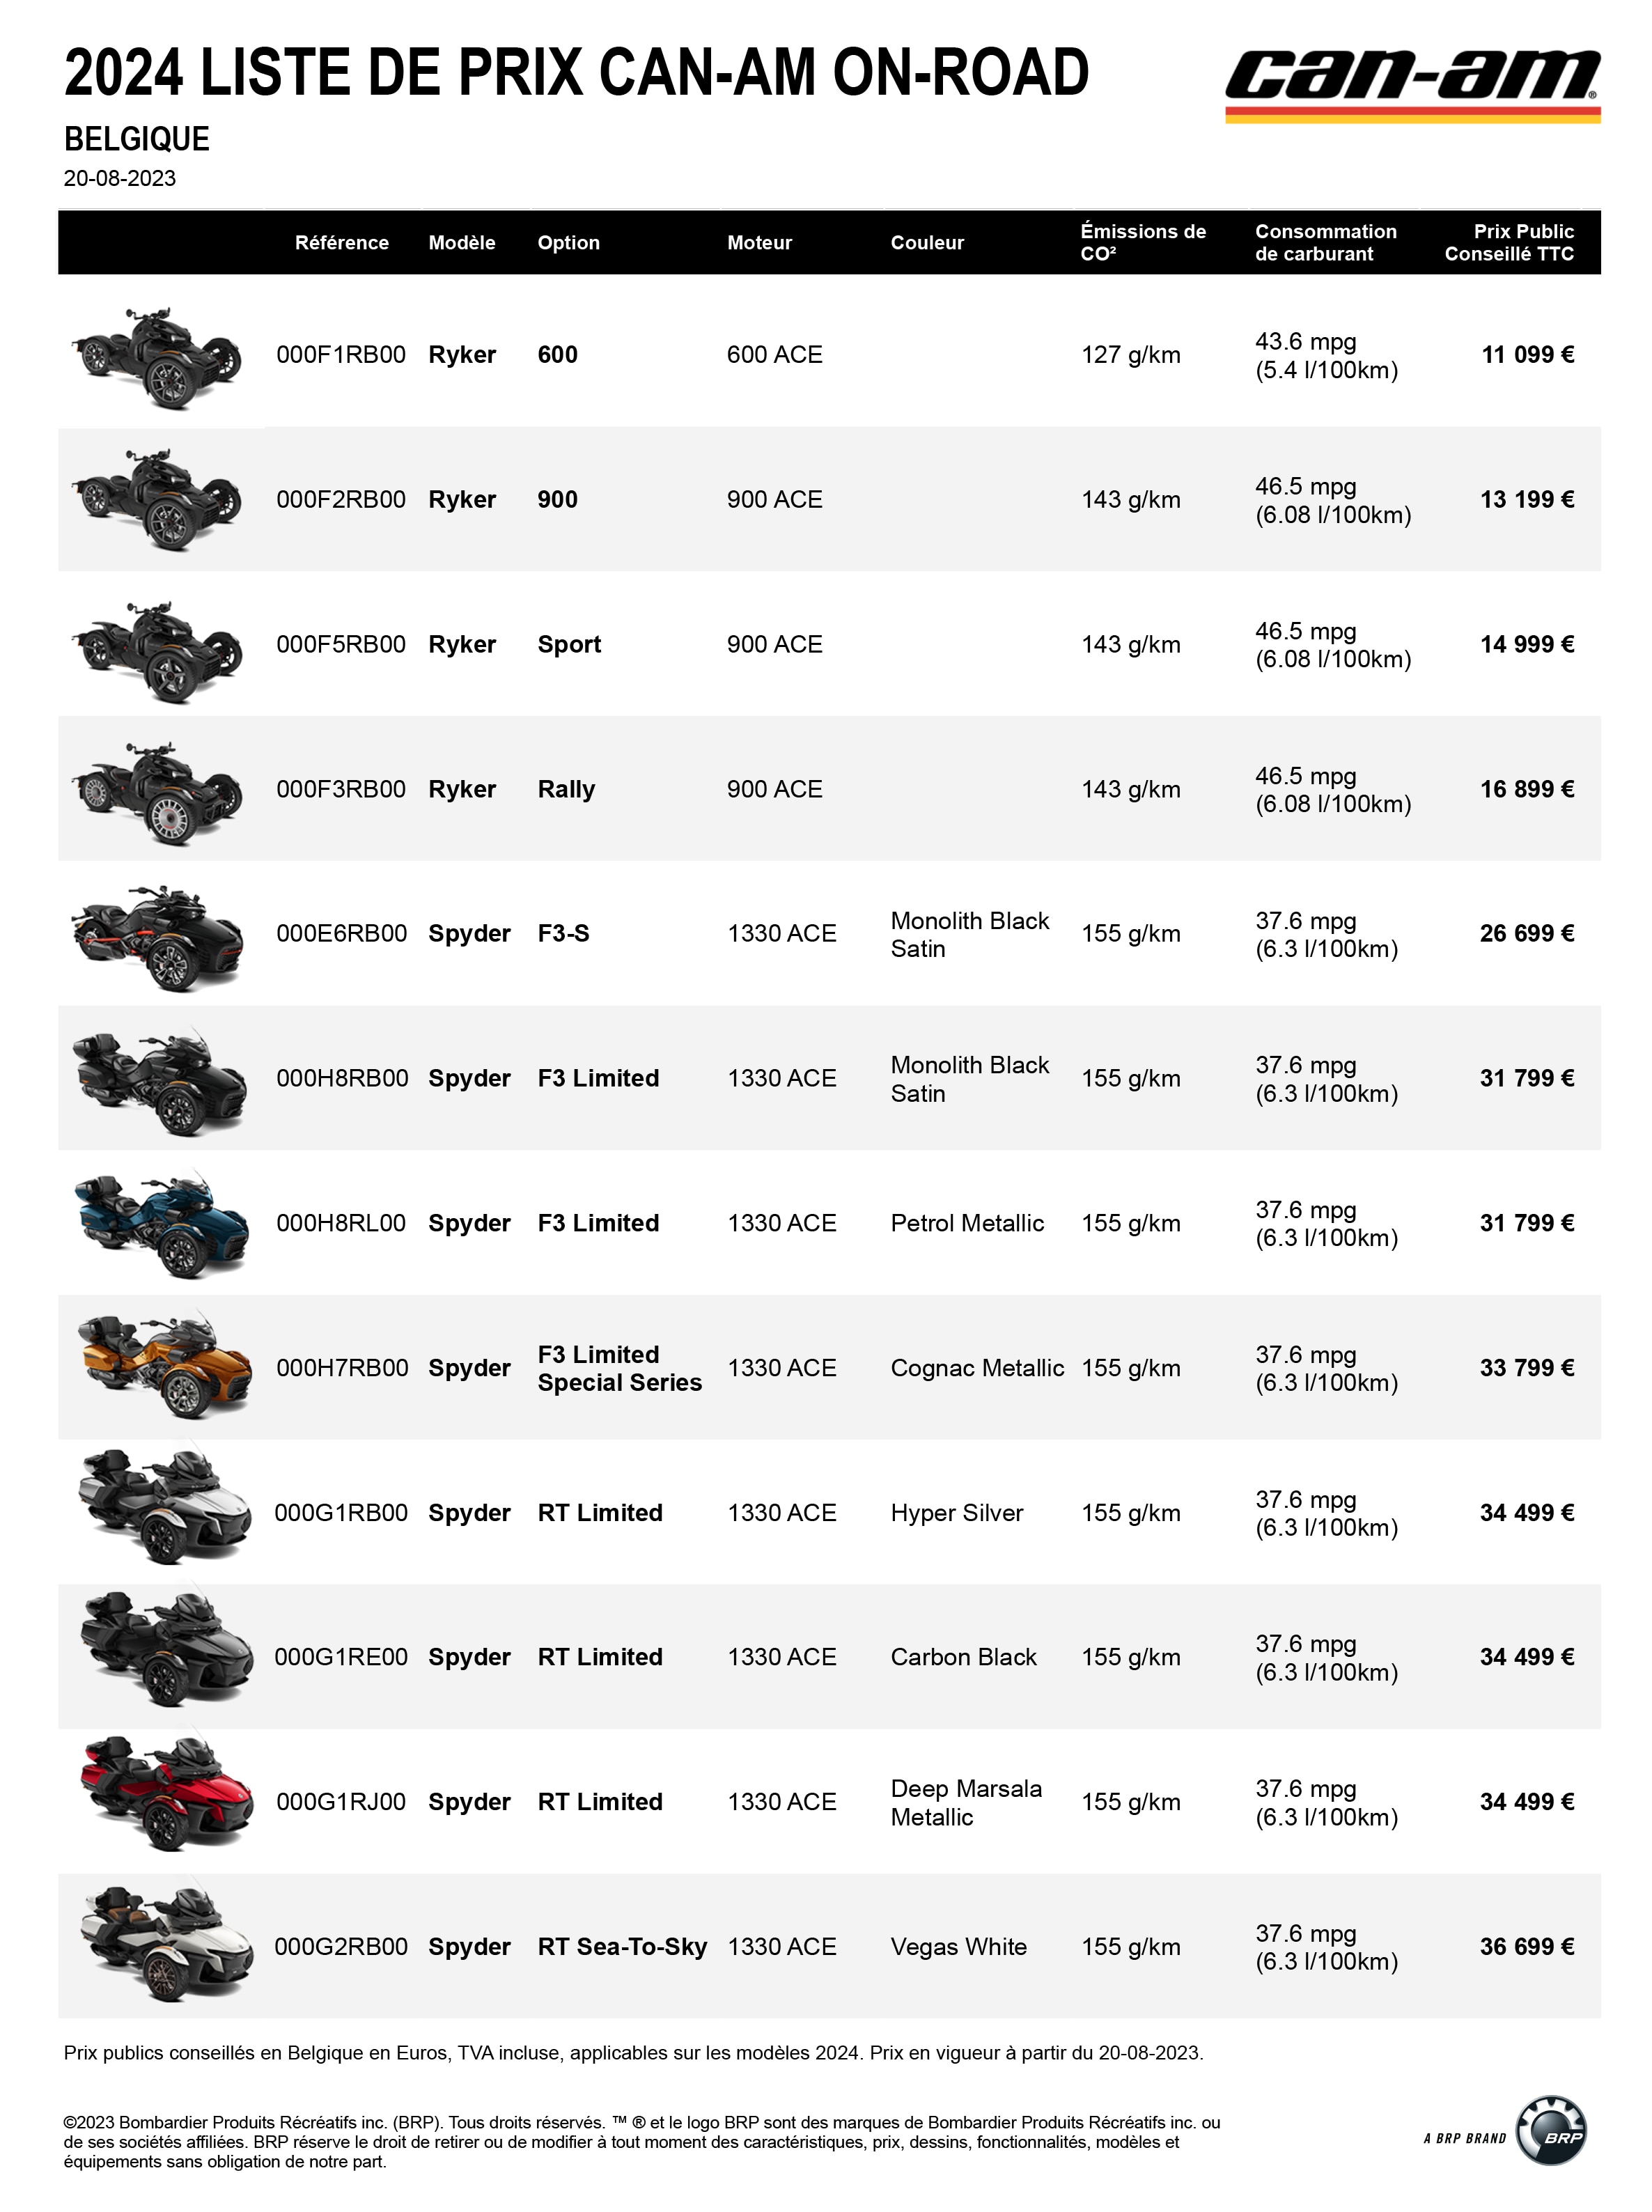 Can-Am ONRD MY24 price list vehicles